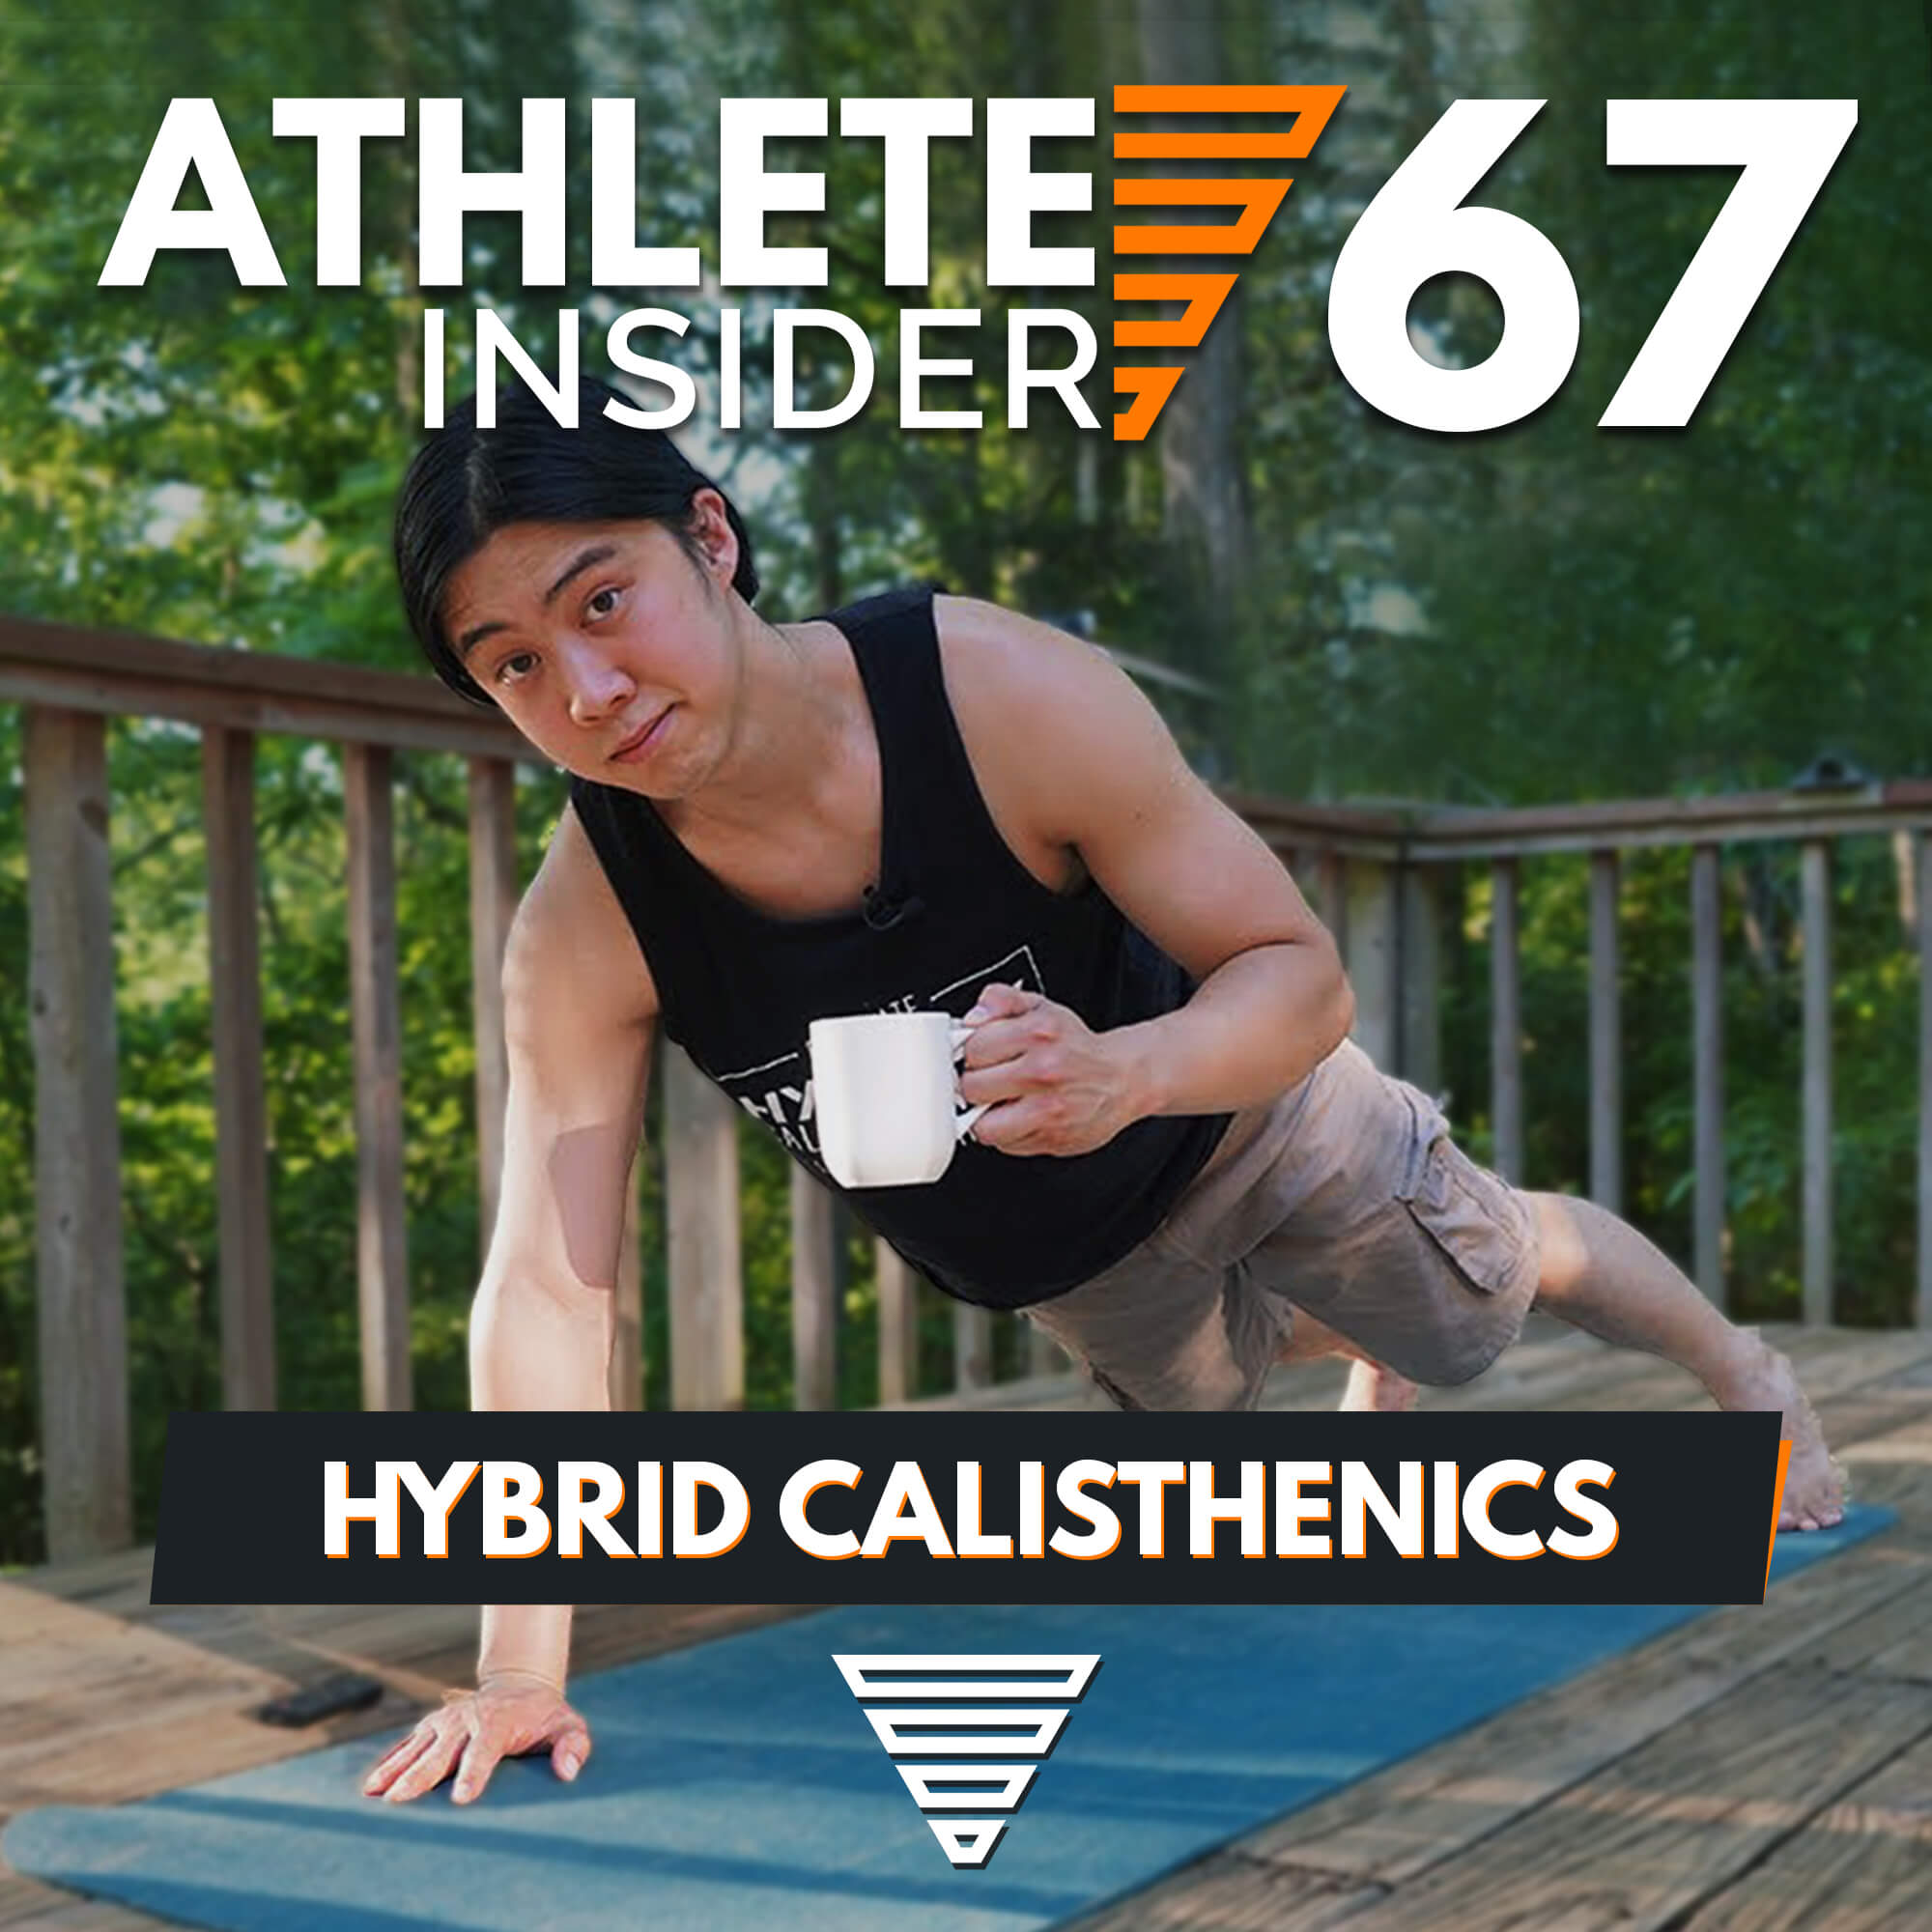 WORKOUT MYTHS, PROGRESS & COFFEE | Interview with Hybrid Calisthenics | Athlete Insider Podcast #67